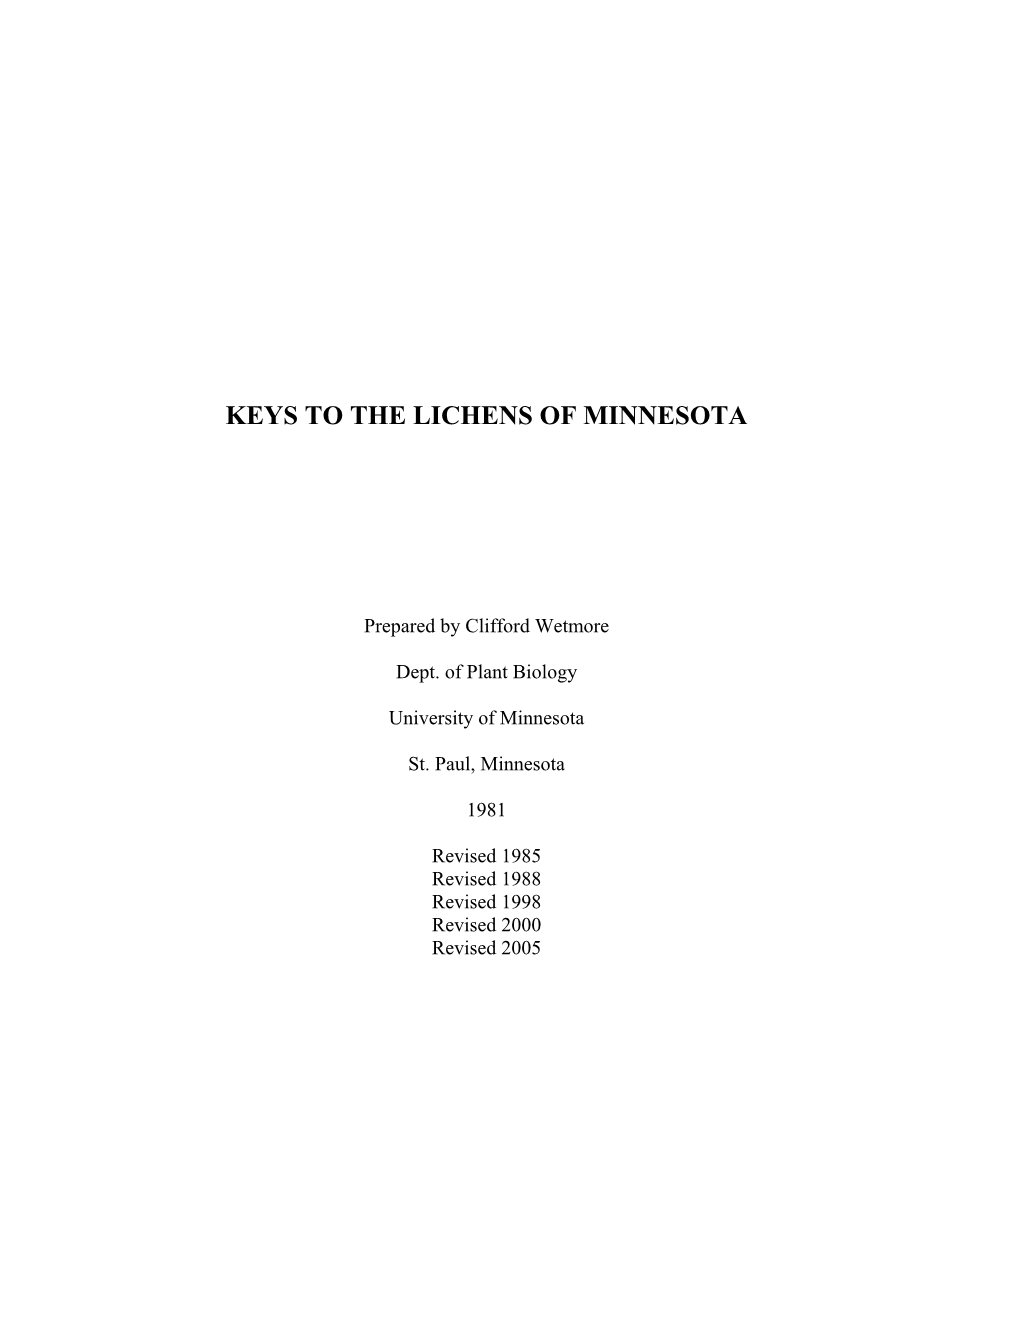 Keys to the Lichens of Minnesota